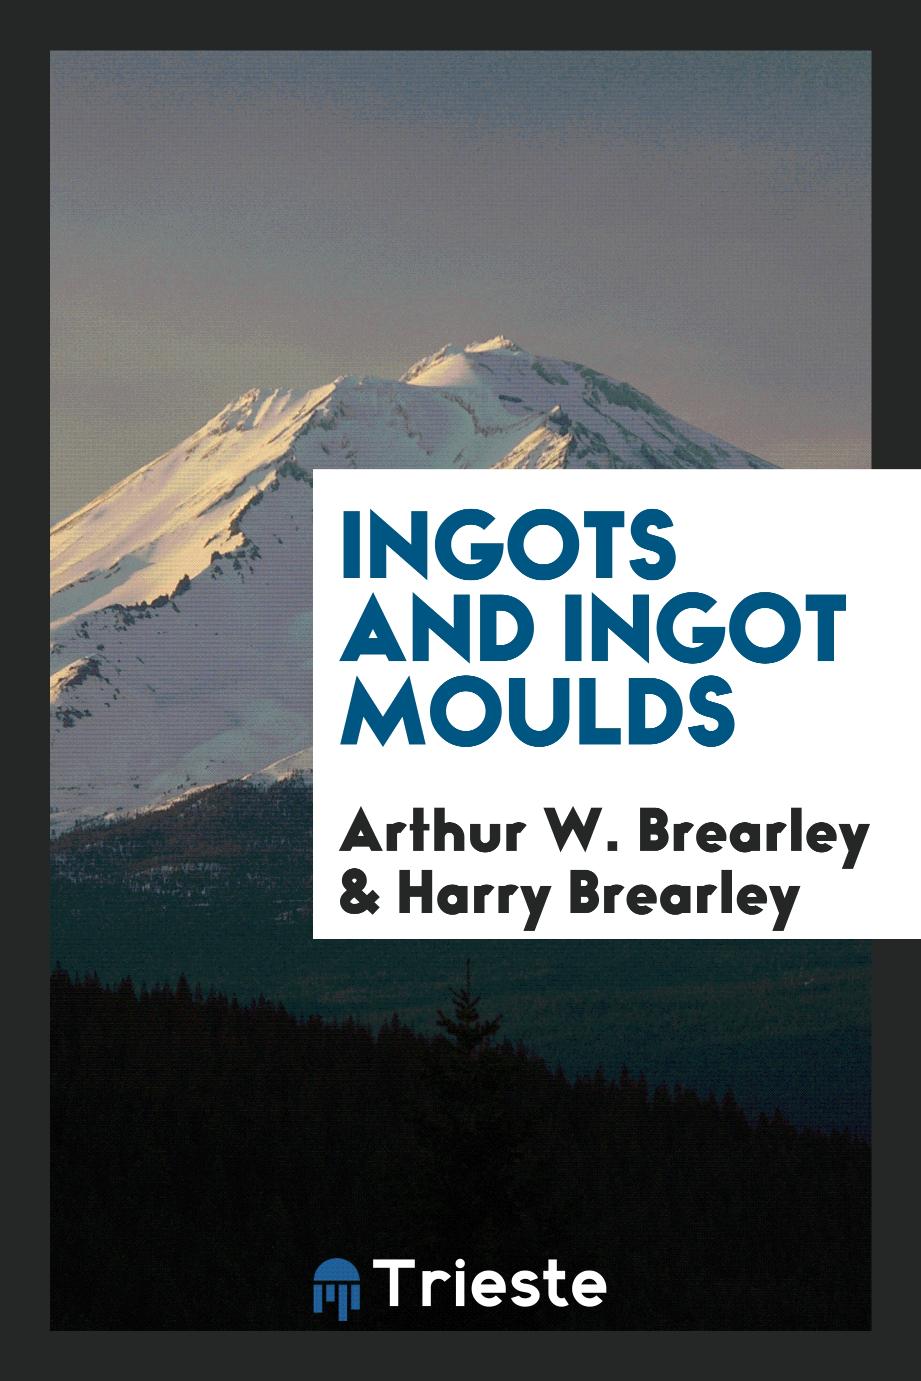 Ingots and ingot moulds